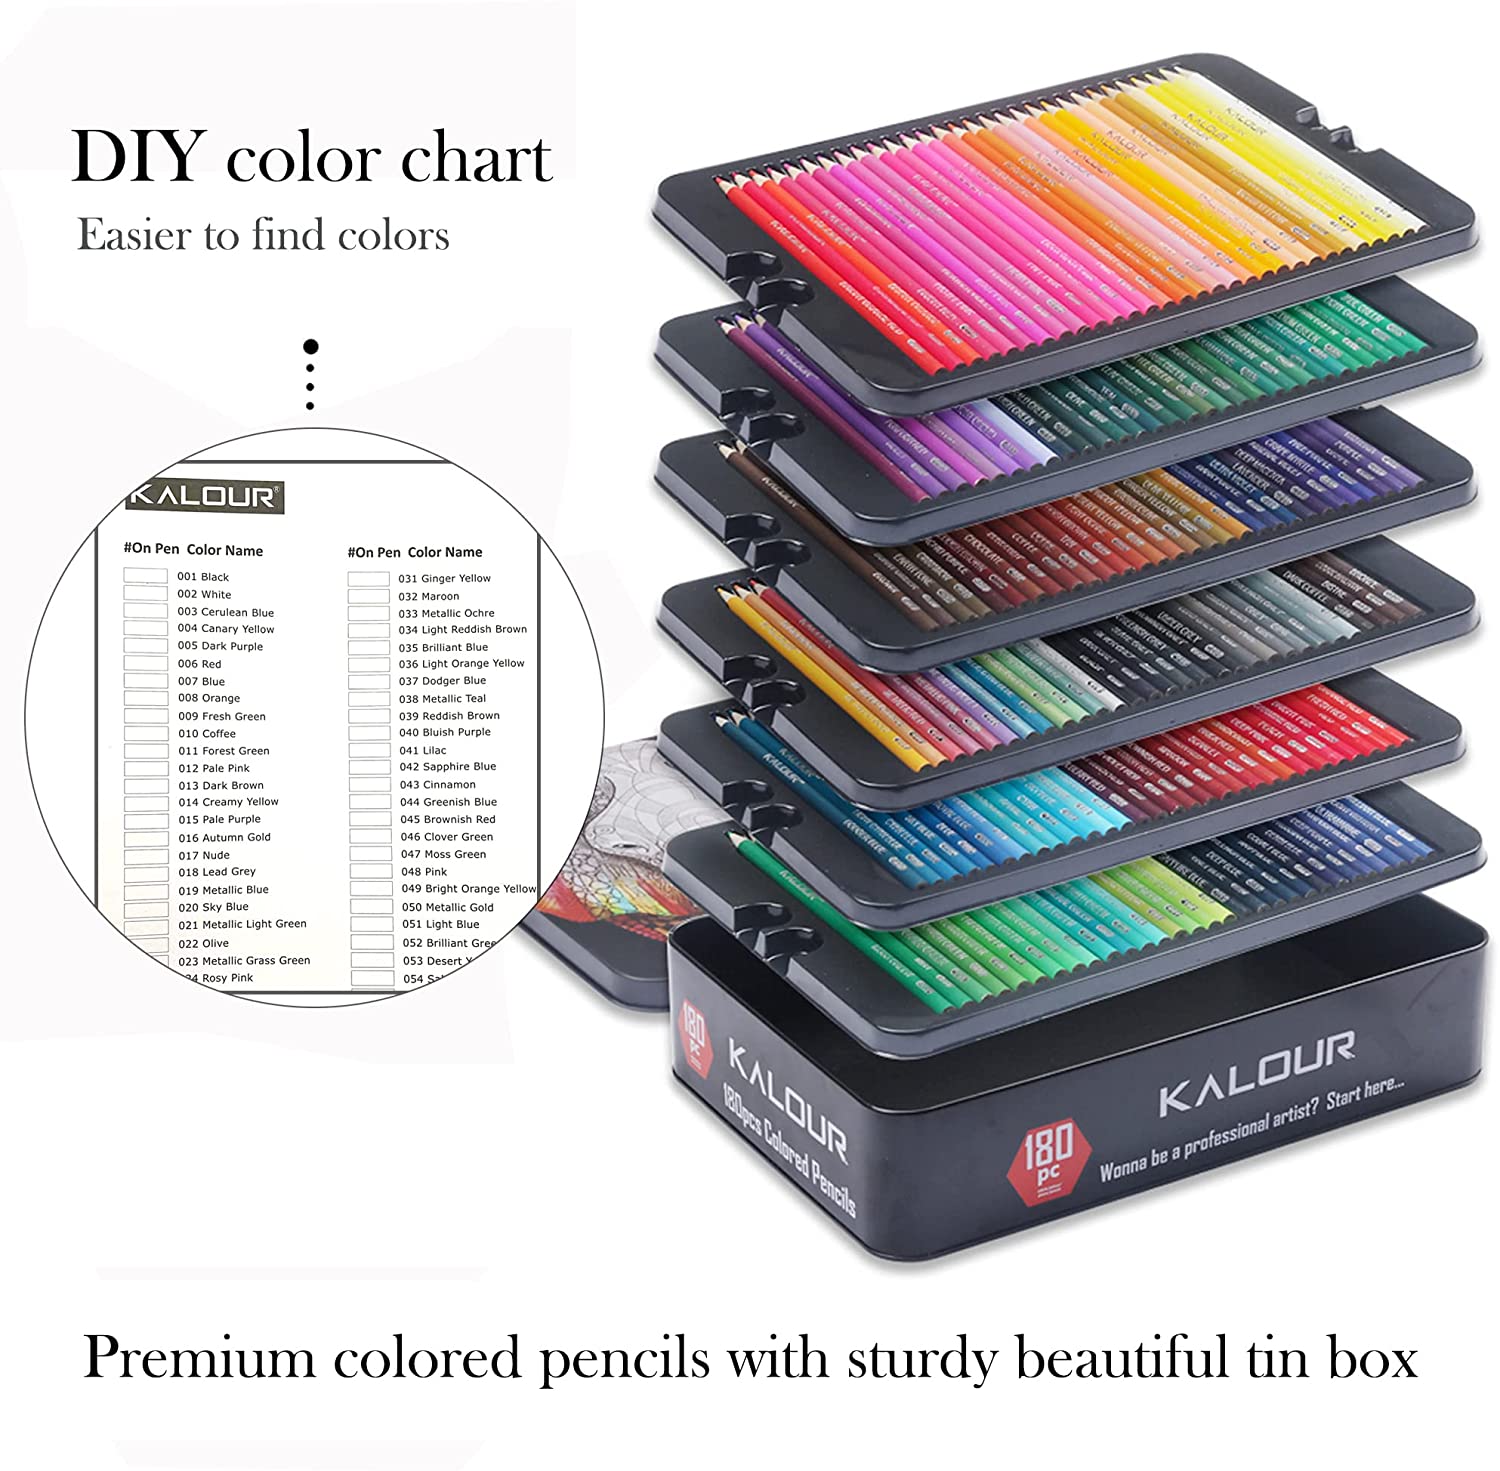 KALOUR 180 Colored Pencil specifications